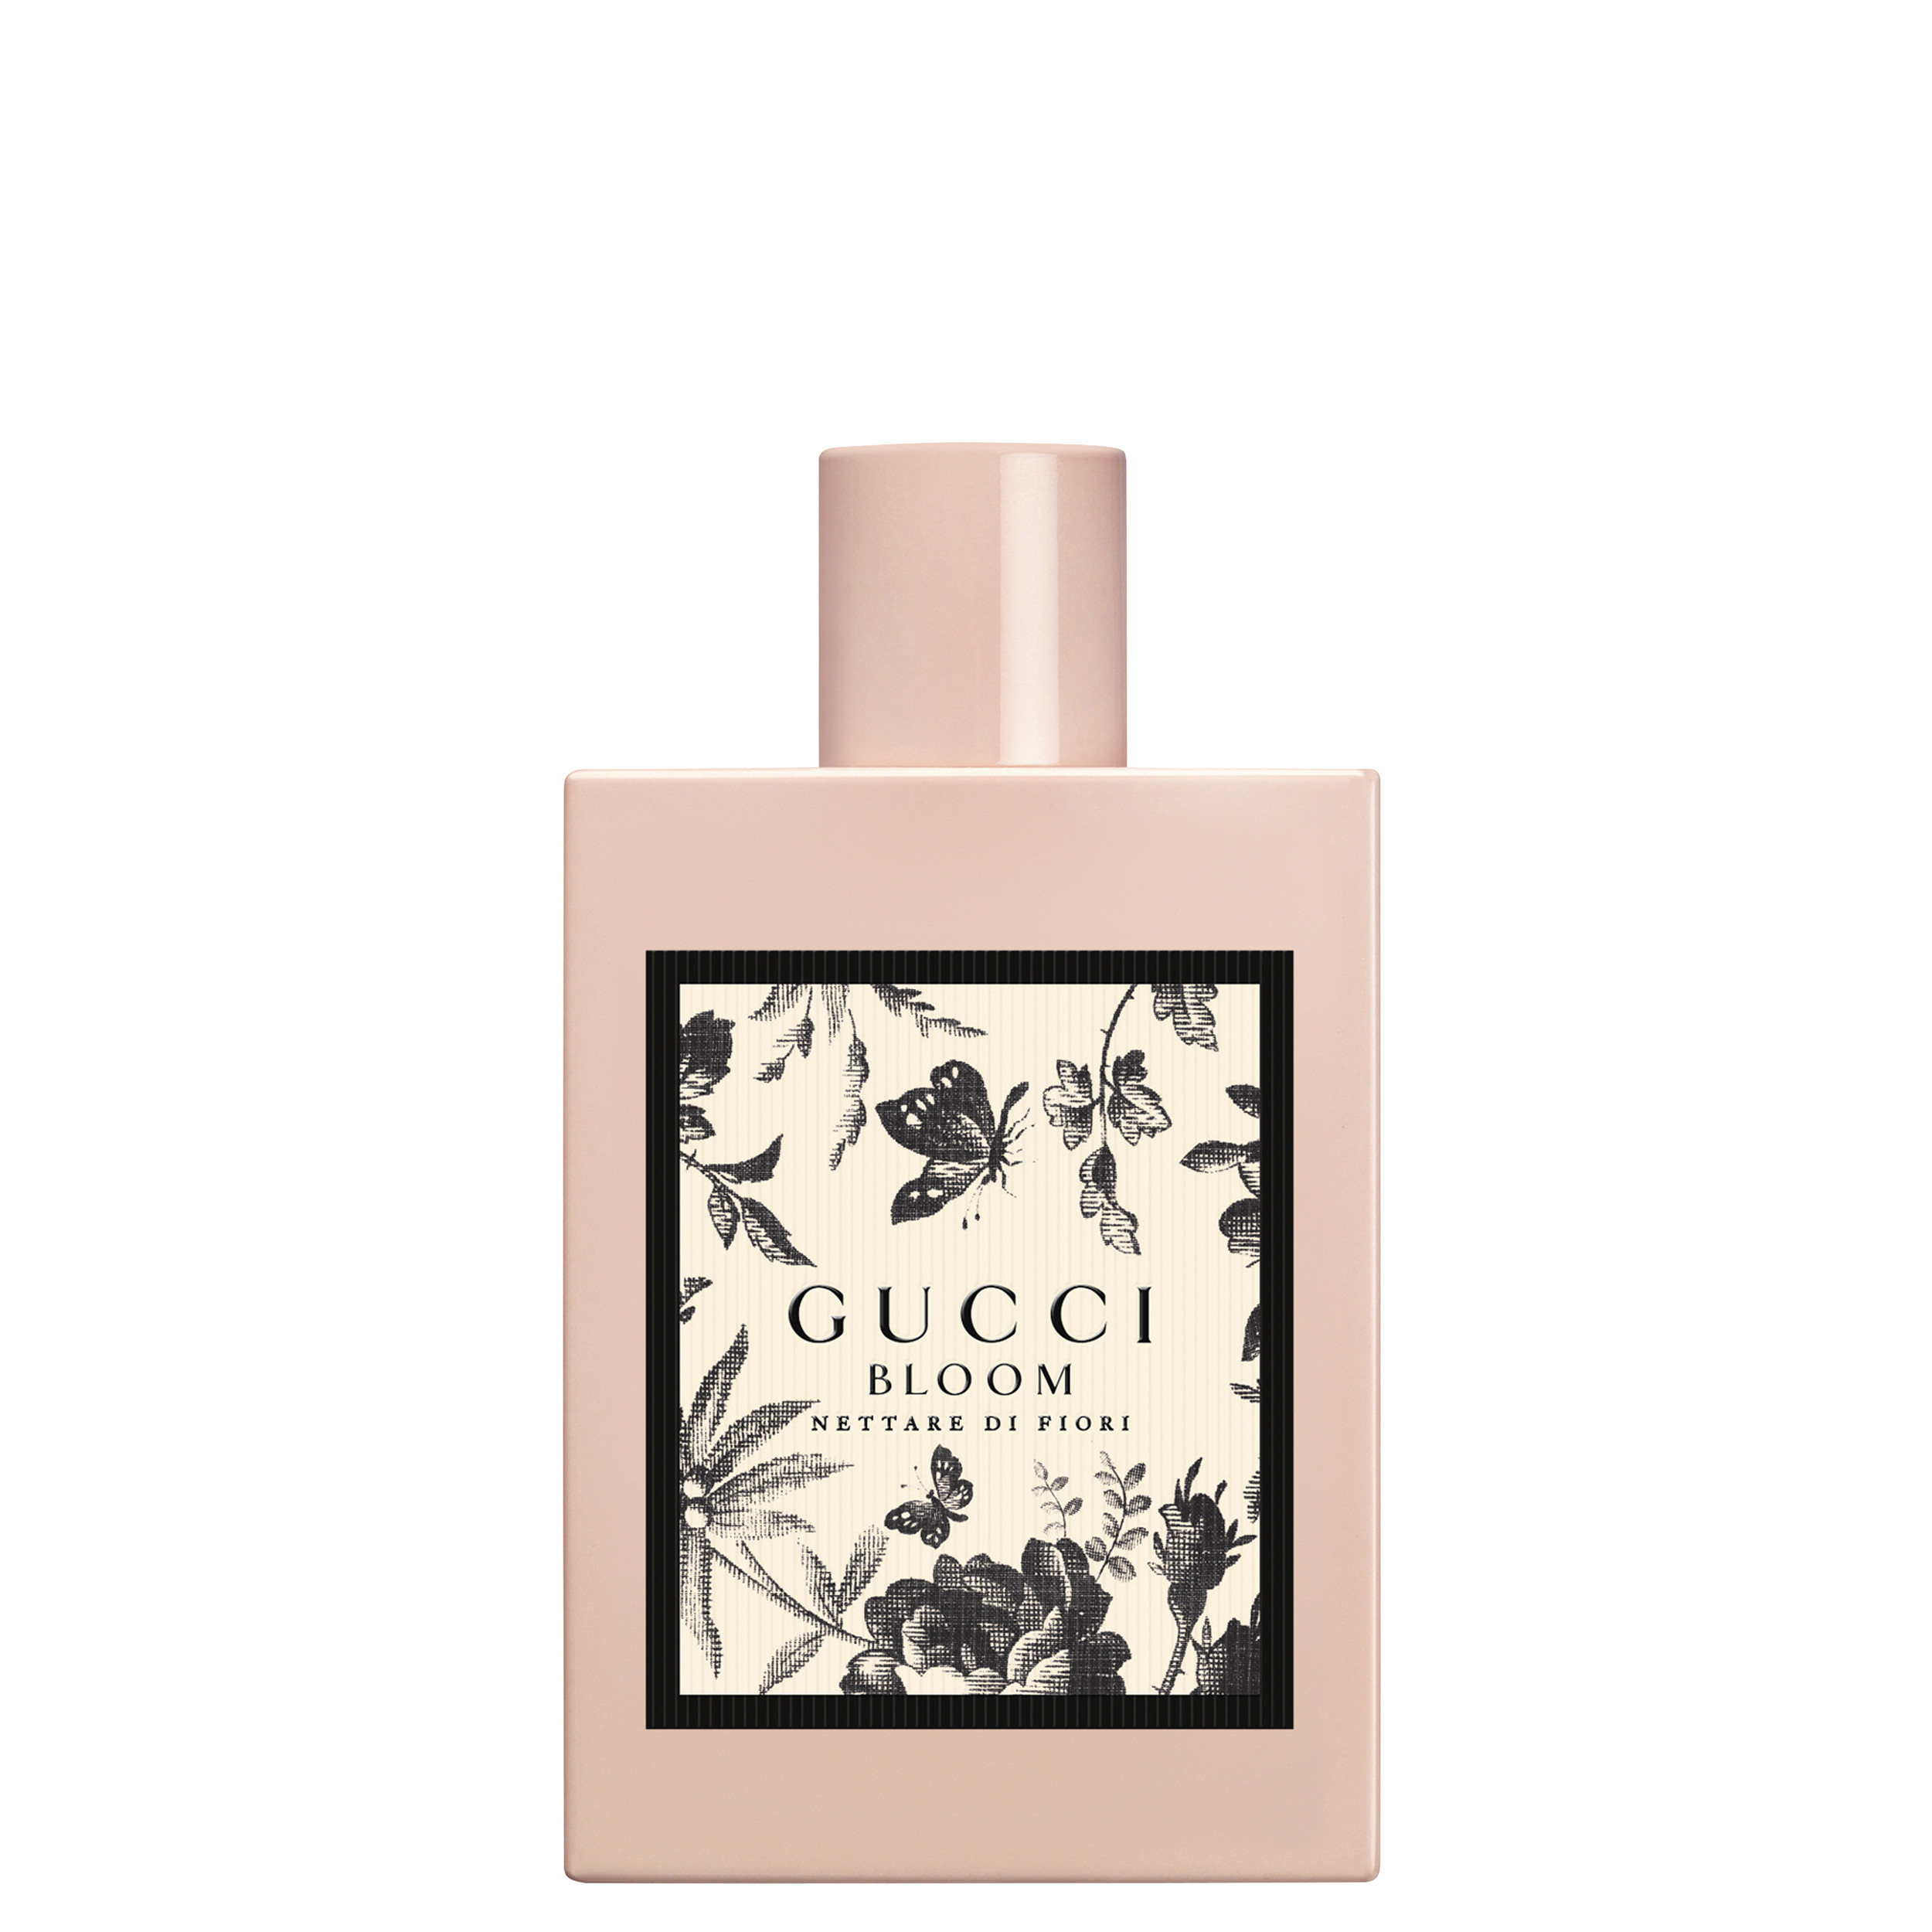 Купить Парфюмерная вода Gucci, Gucci Bloom Nettare Di Fiori 100ml тестер, Италия